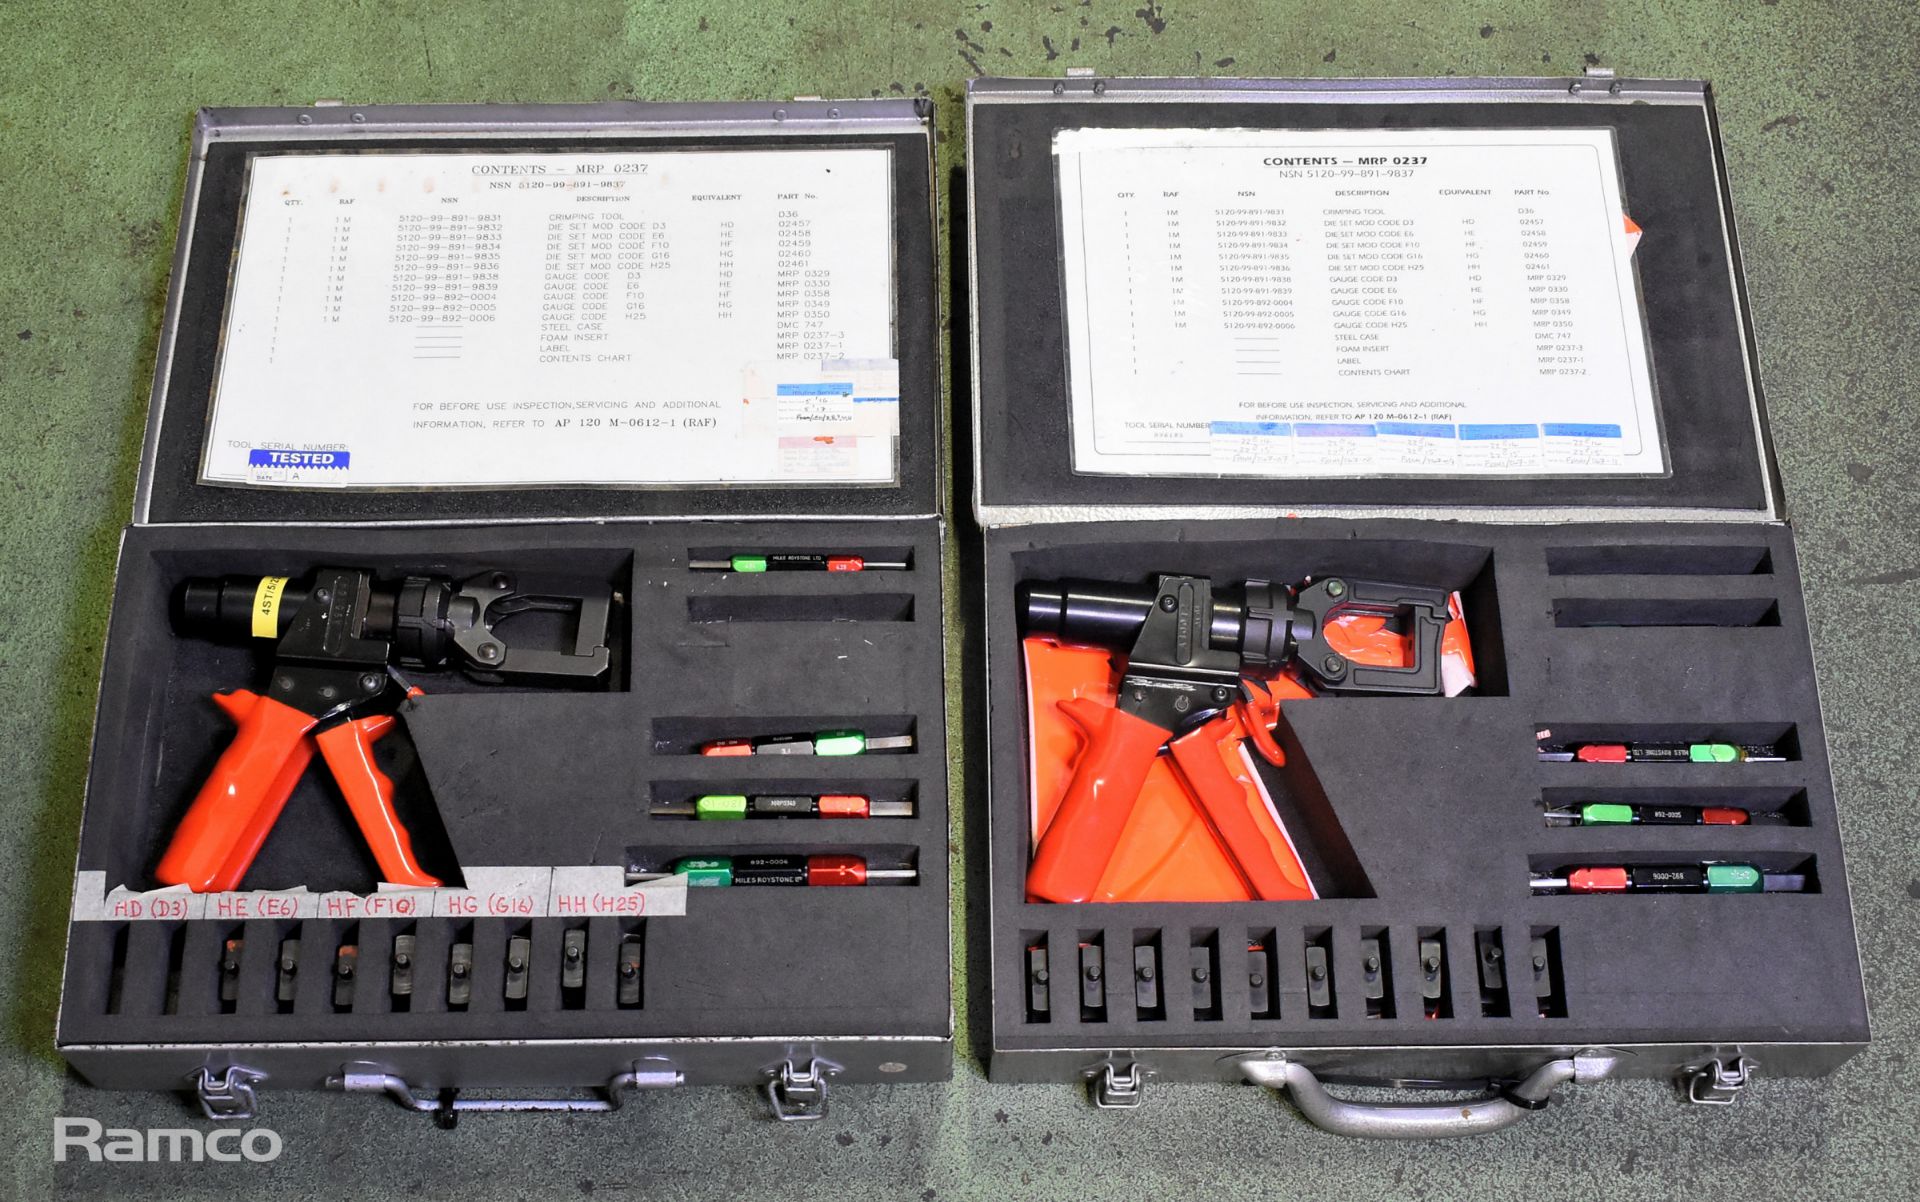 2x Glenair MRP0237 hand hydraulic crimping tool kits - 1 kit incomplete